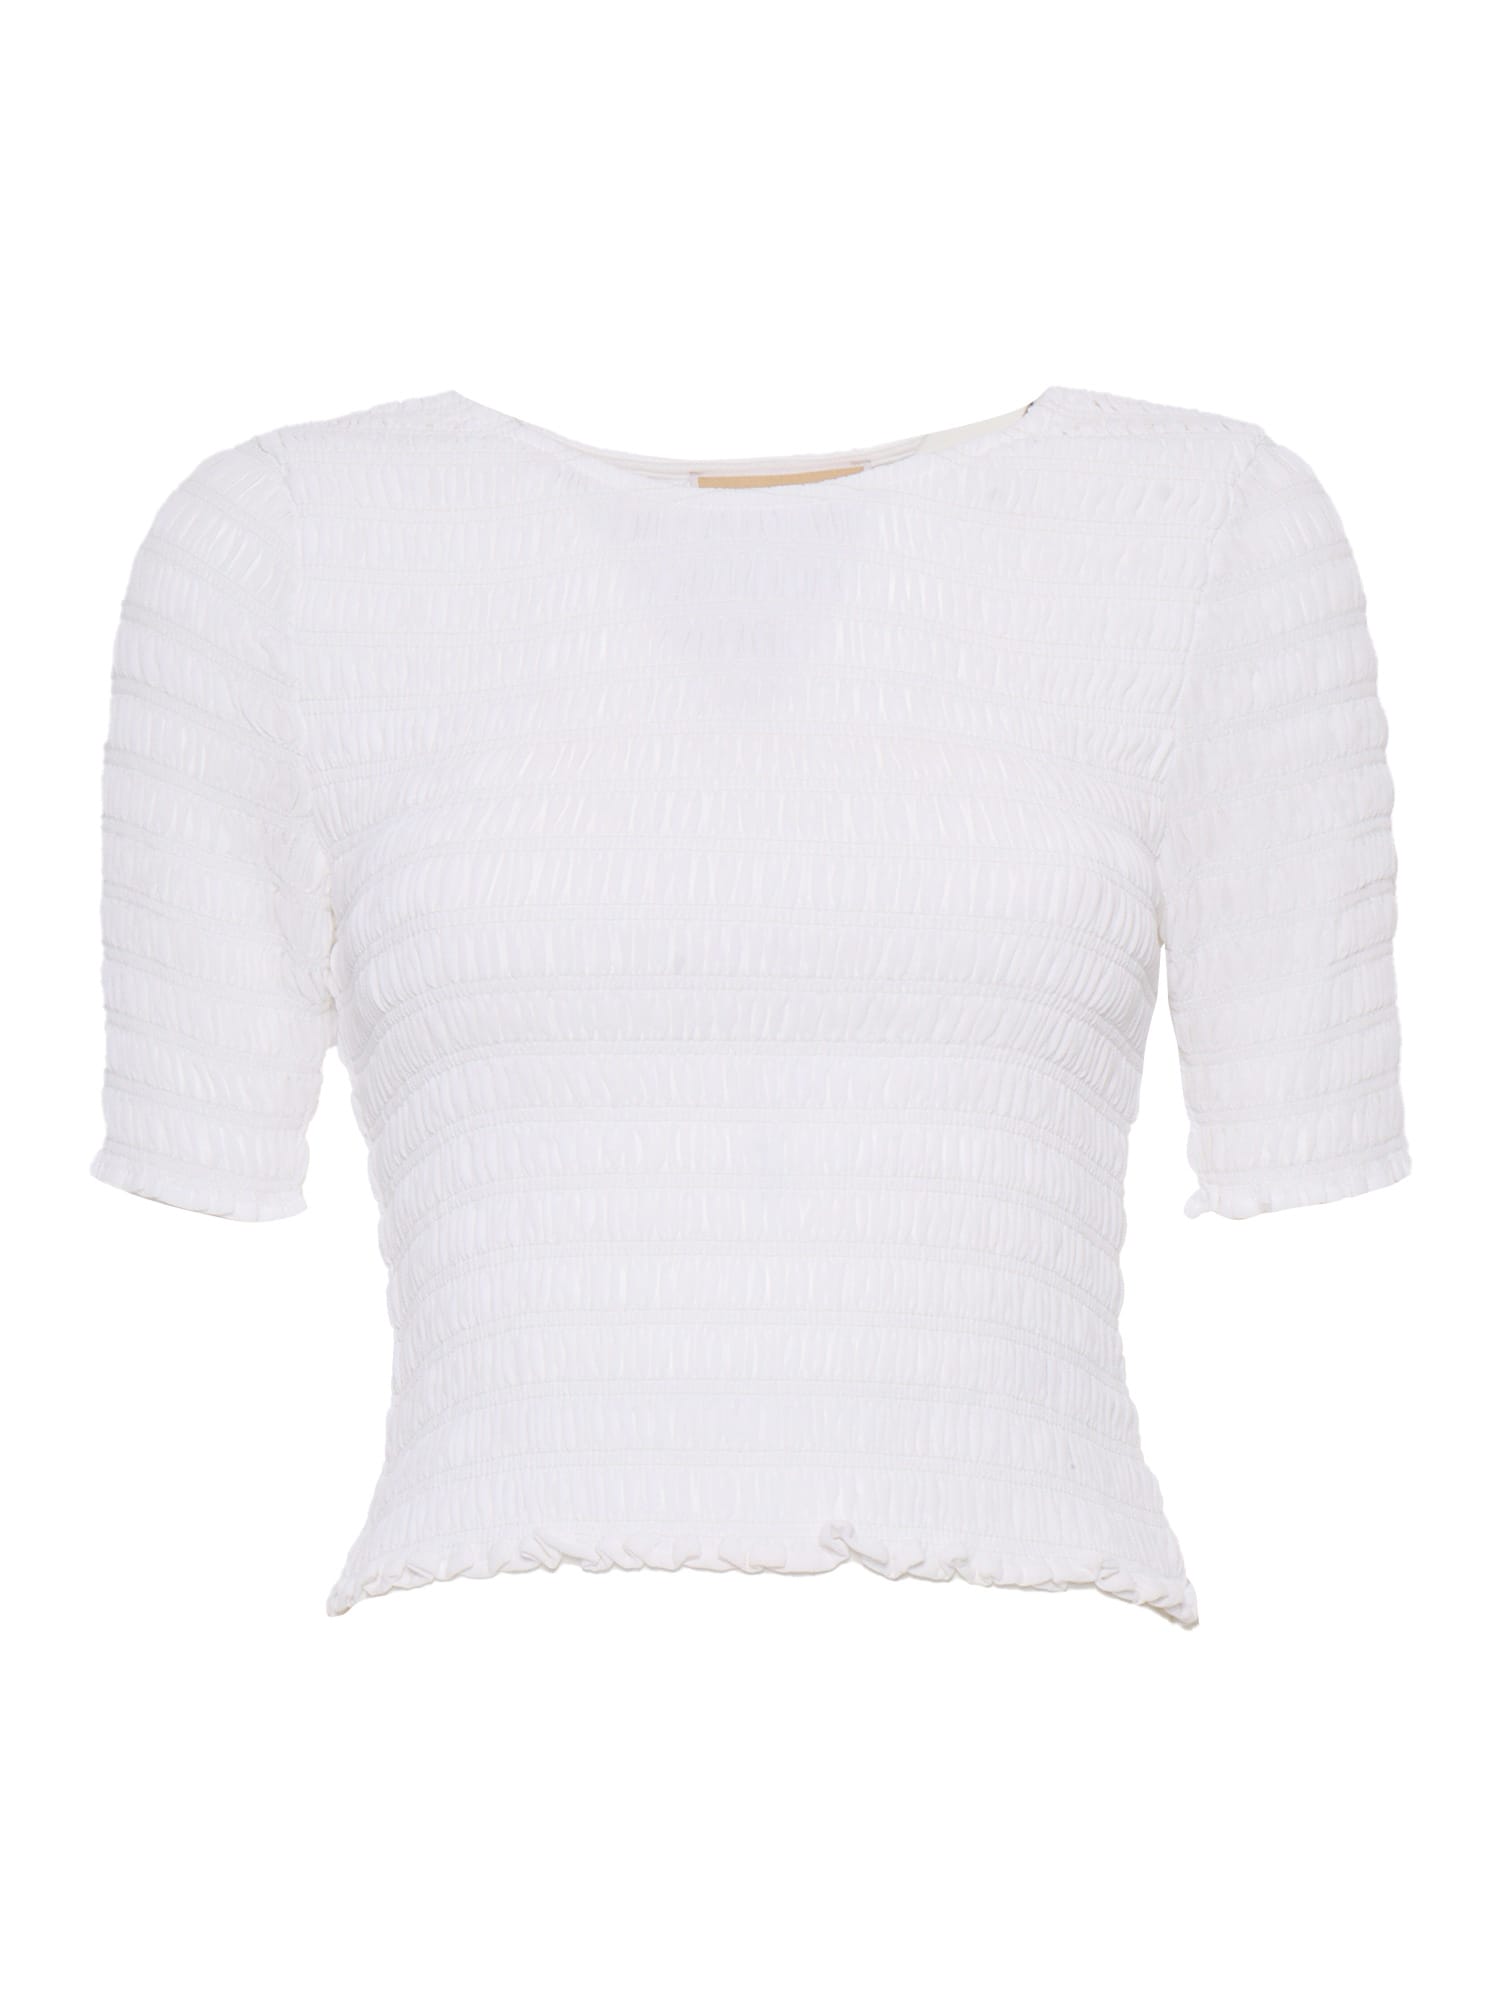 Shop Michael Kors White Elastic Stretch T-shirt